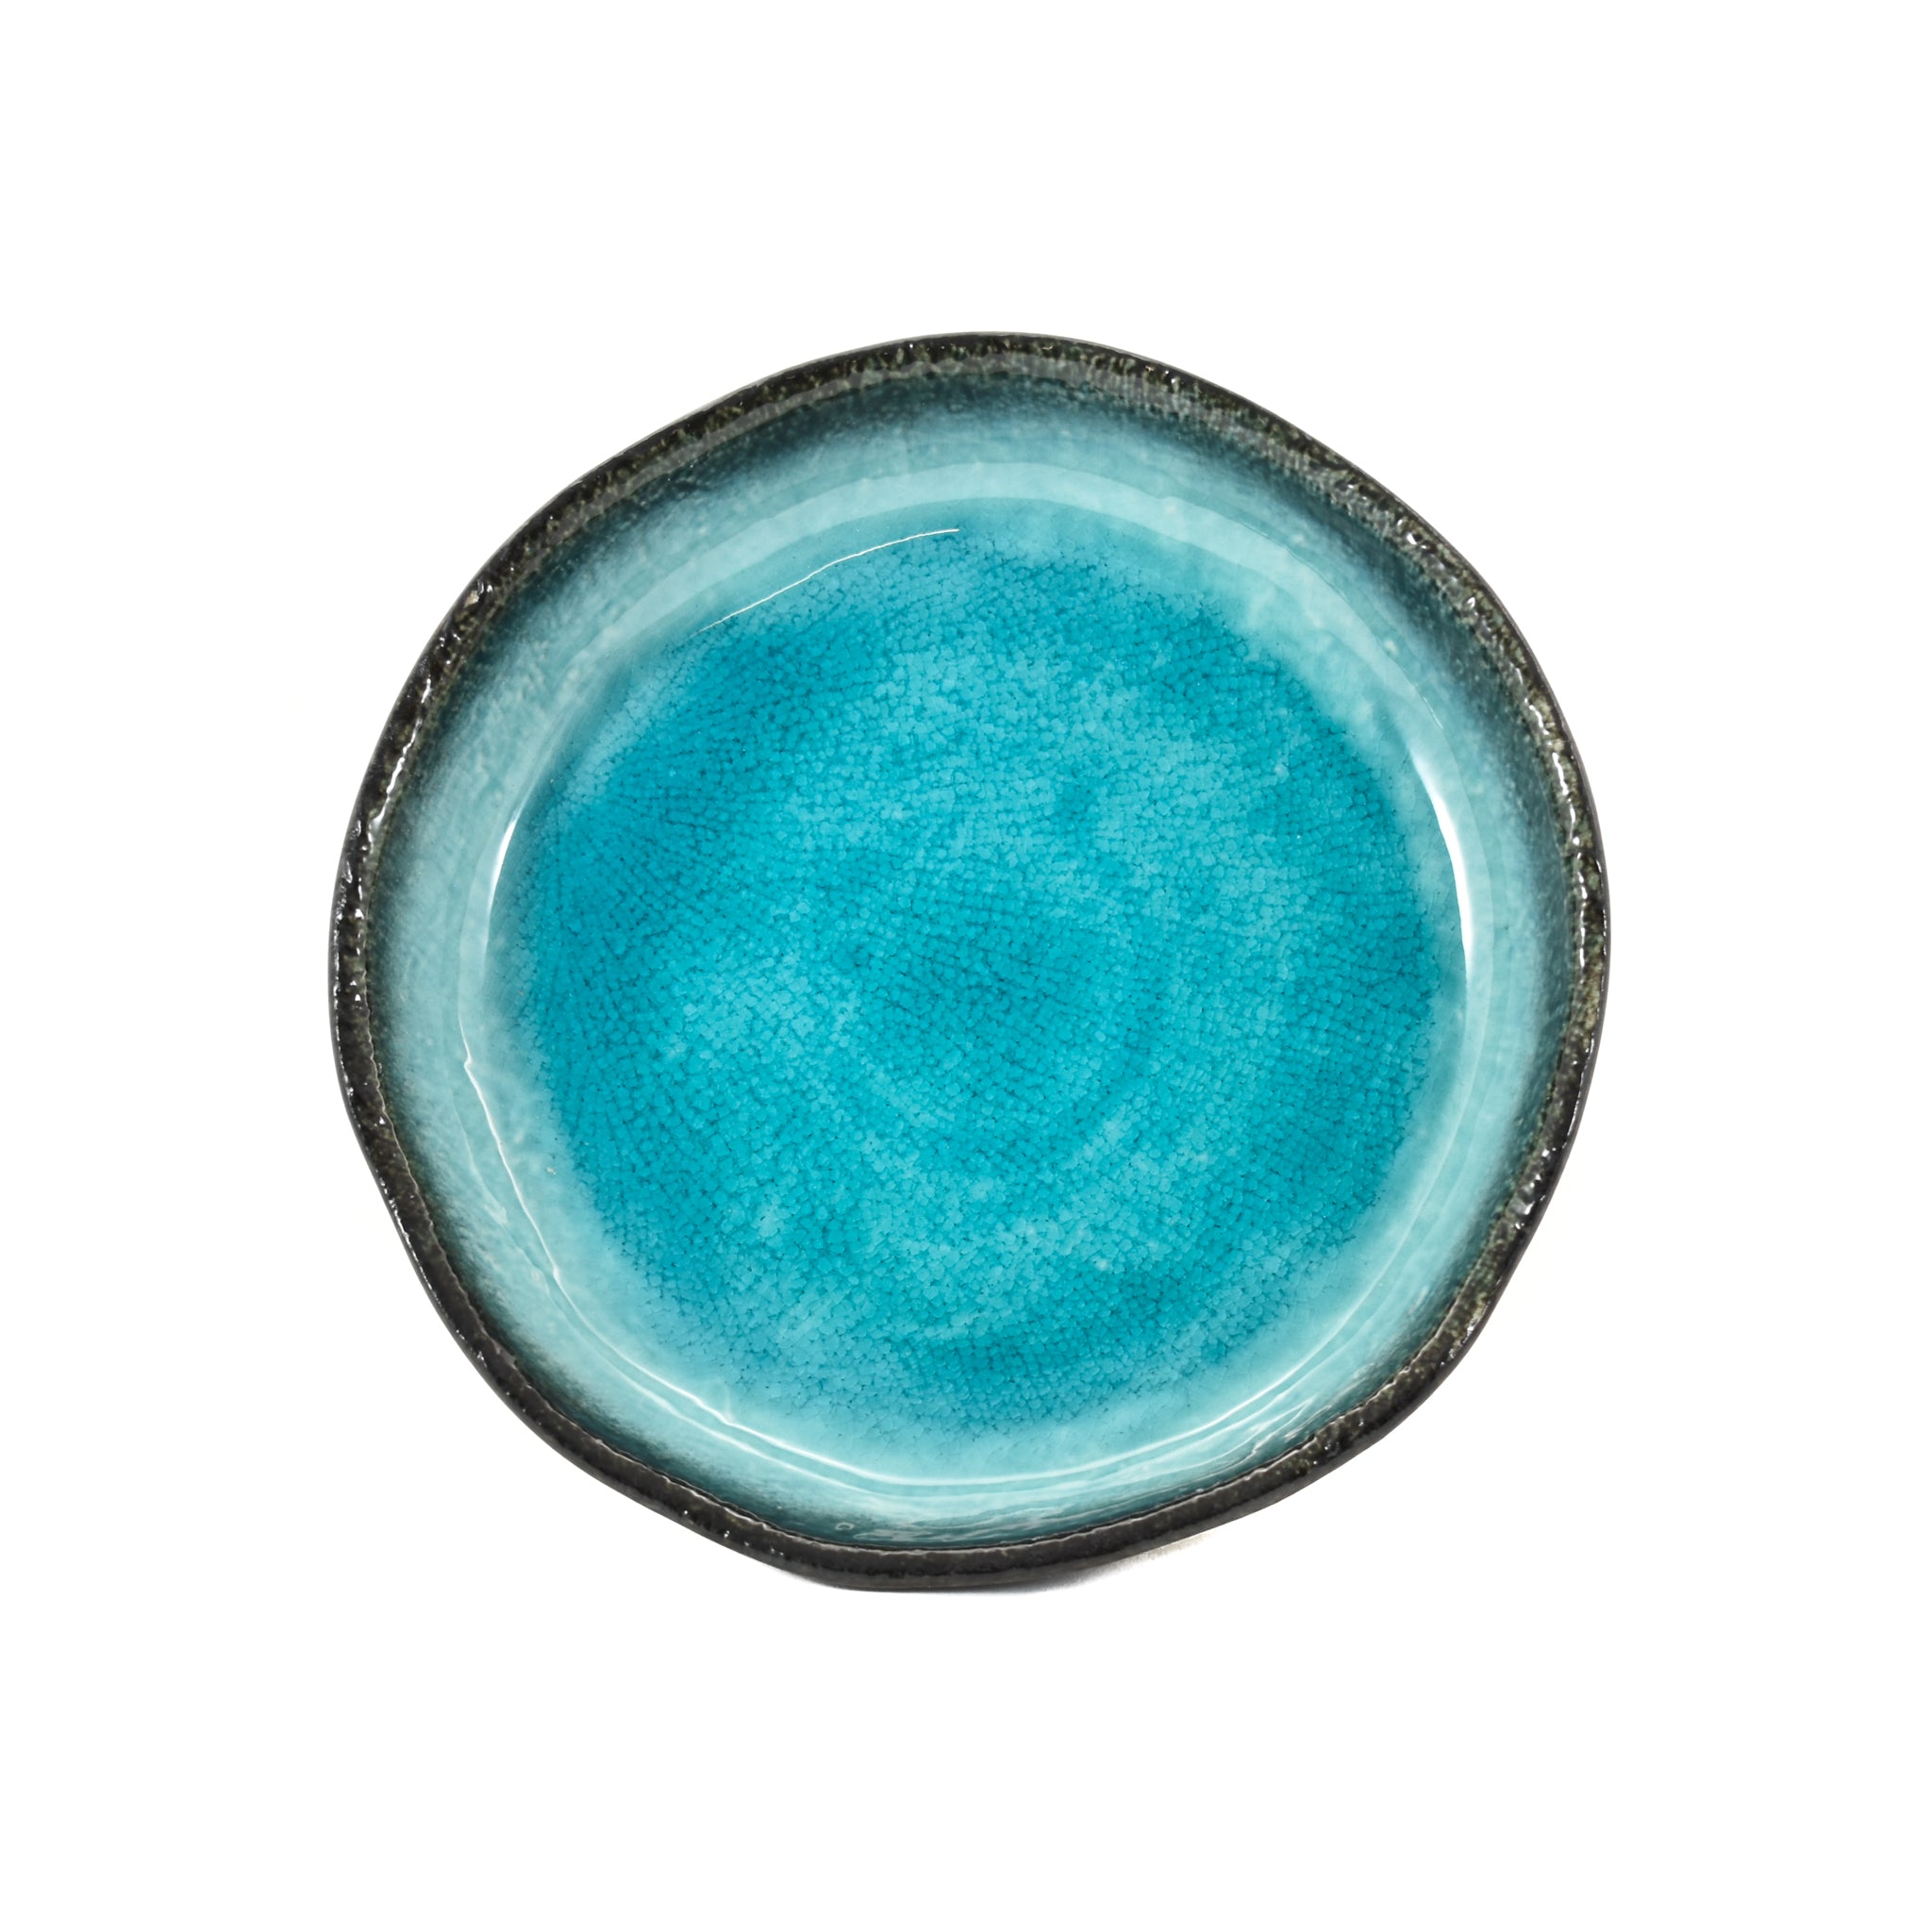 Turquoise Large Round Dish 21.5cm dia x 4cm high